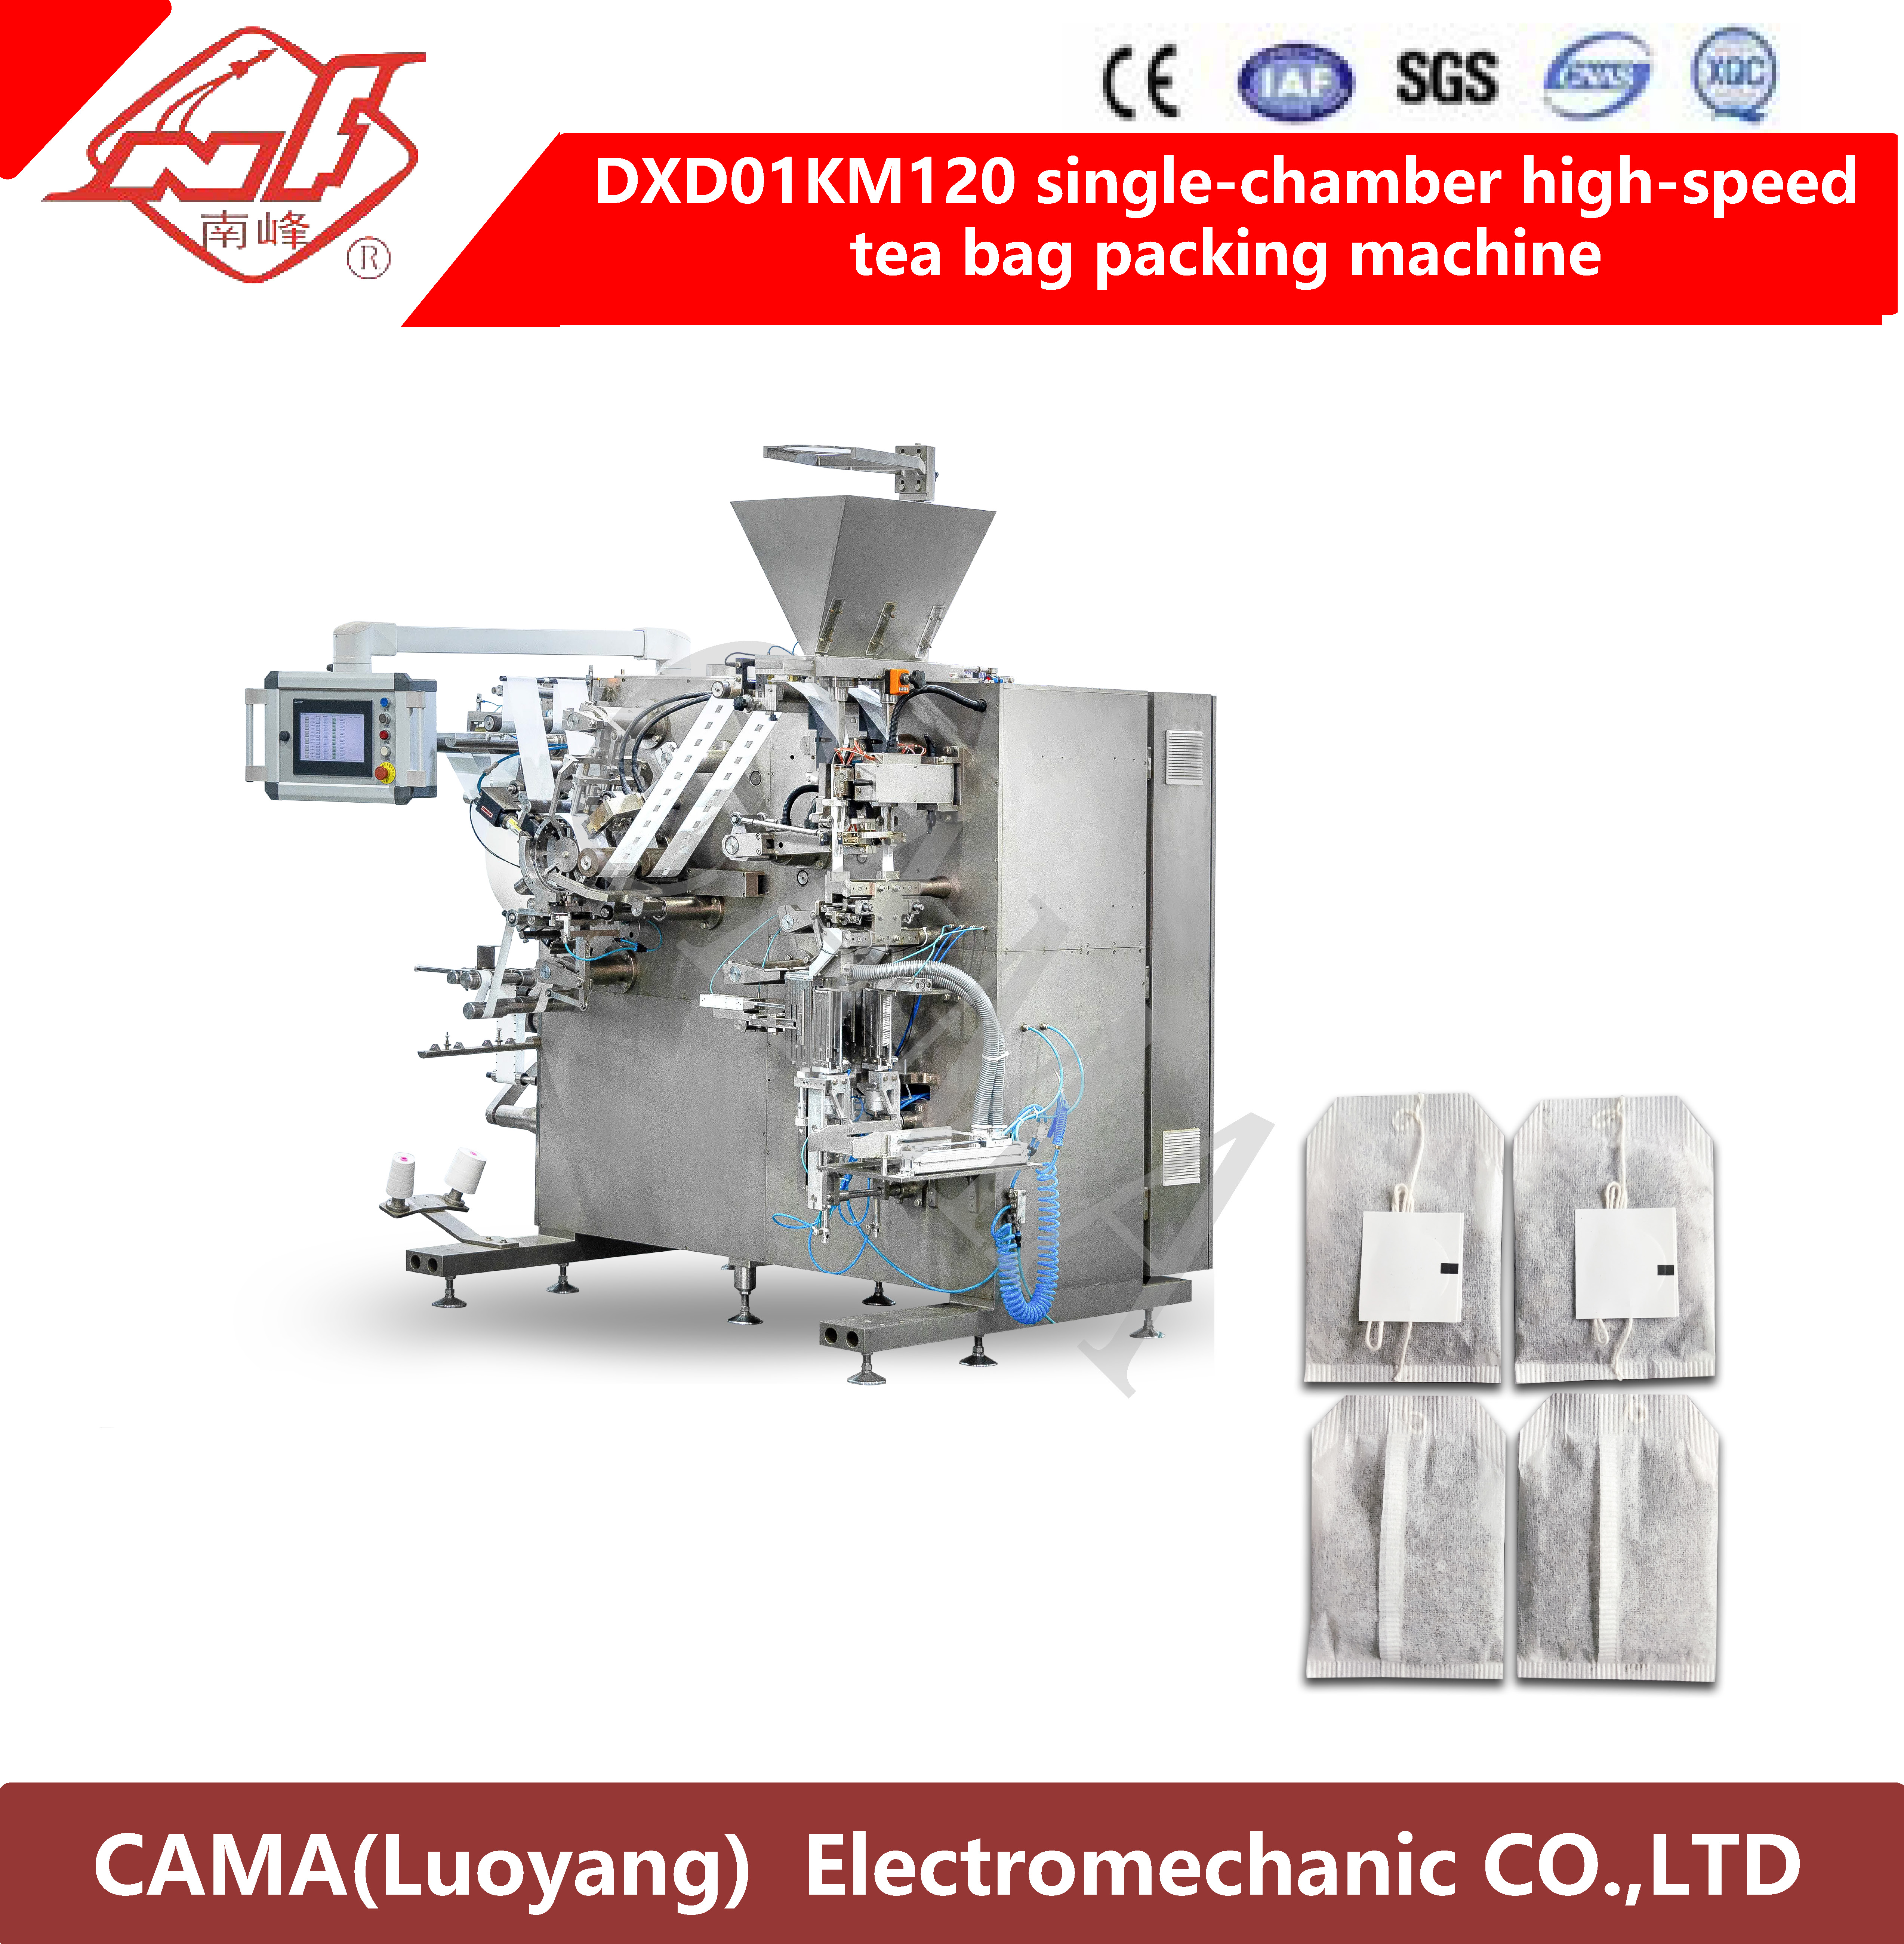 CAMA (LuoYang)Electromechanic Co.,Ltd.